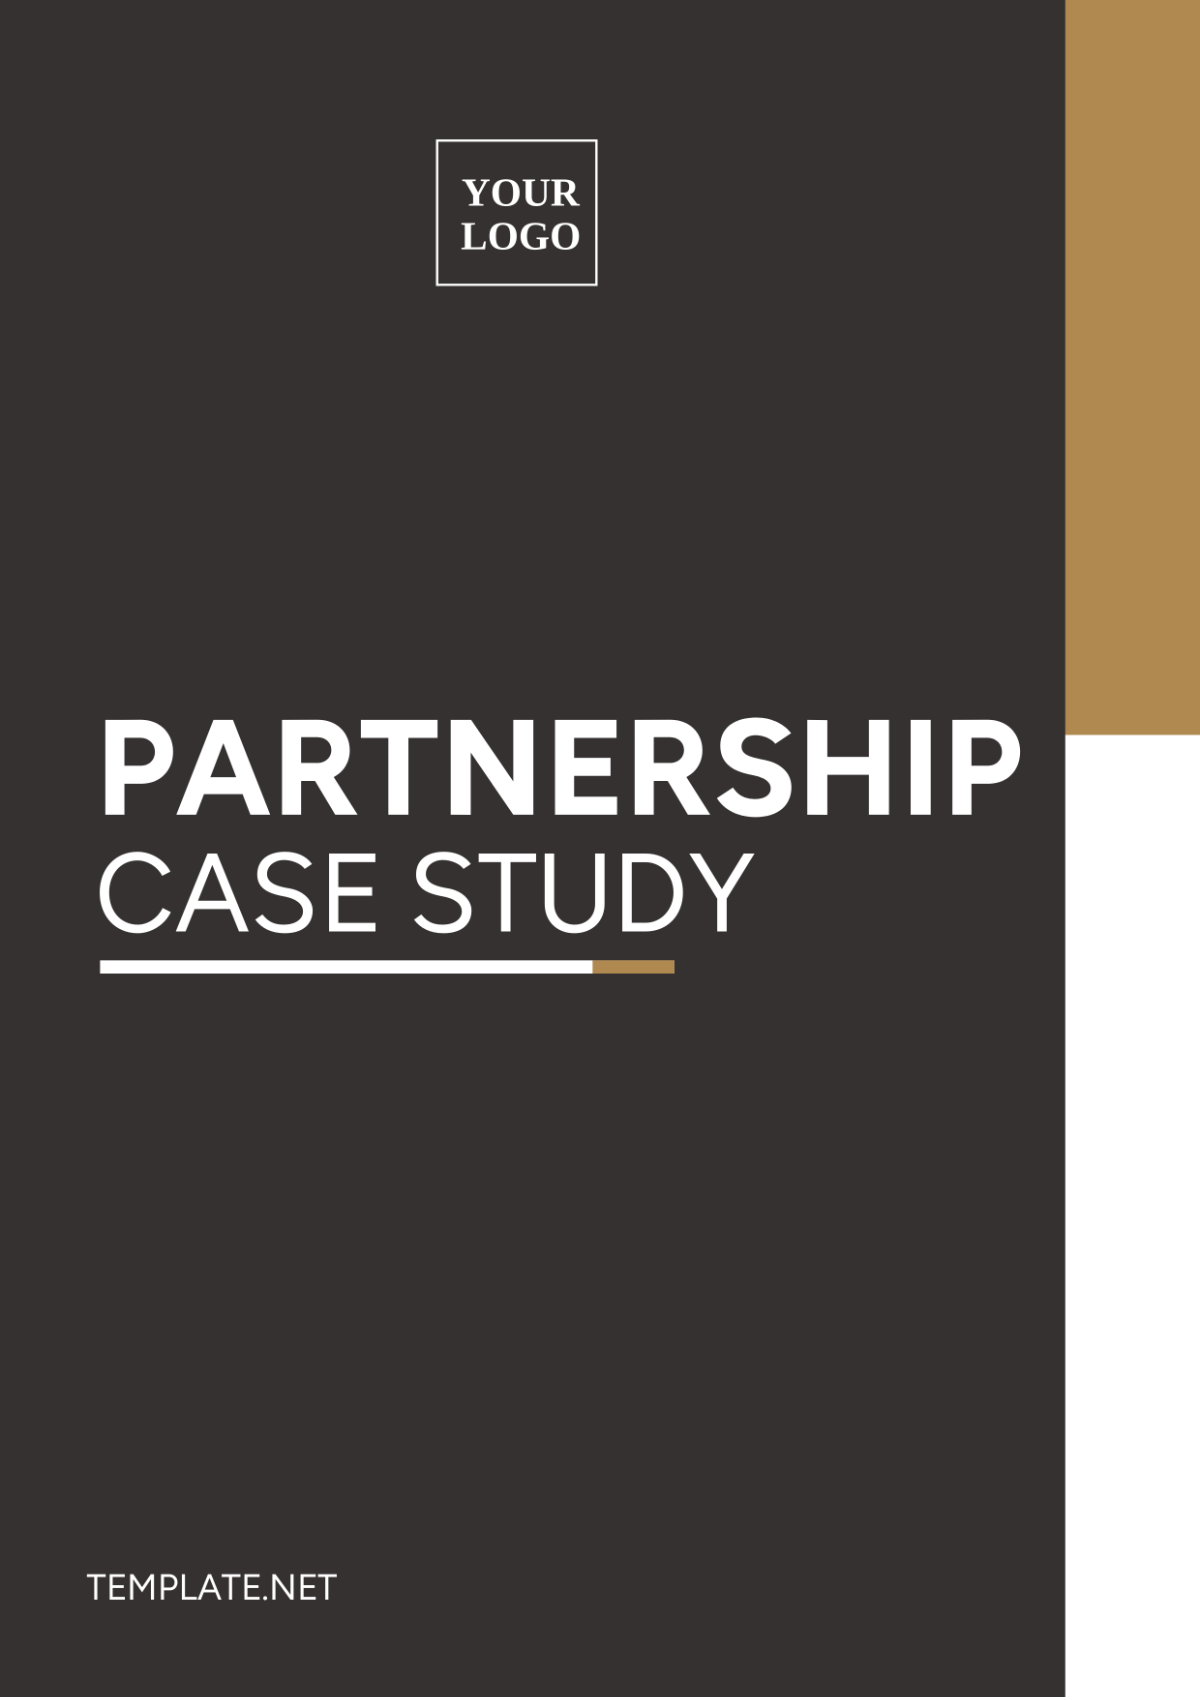 Partnership Case Study Template